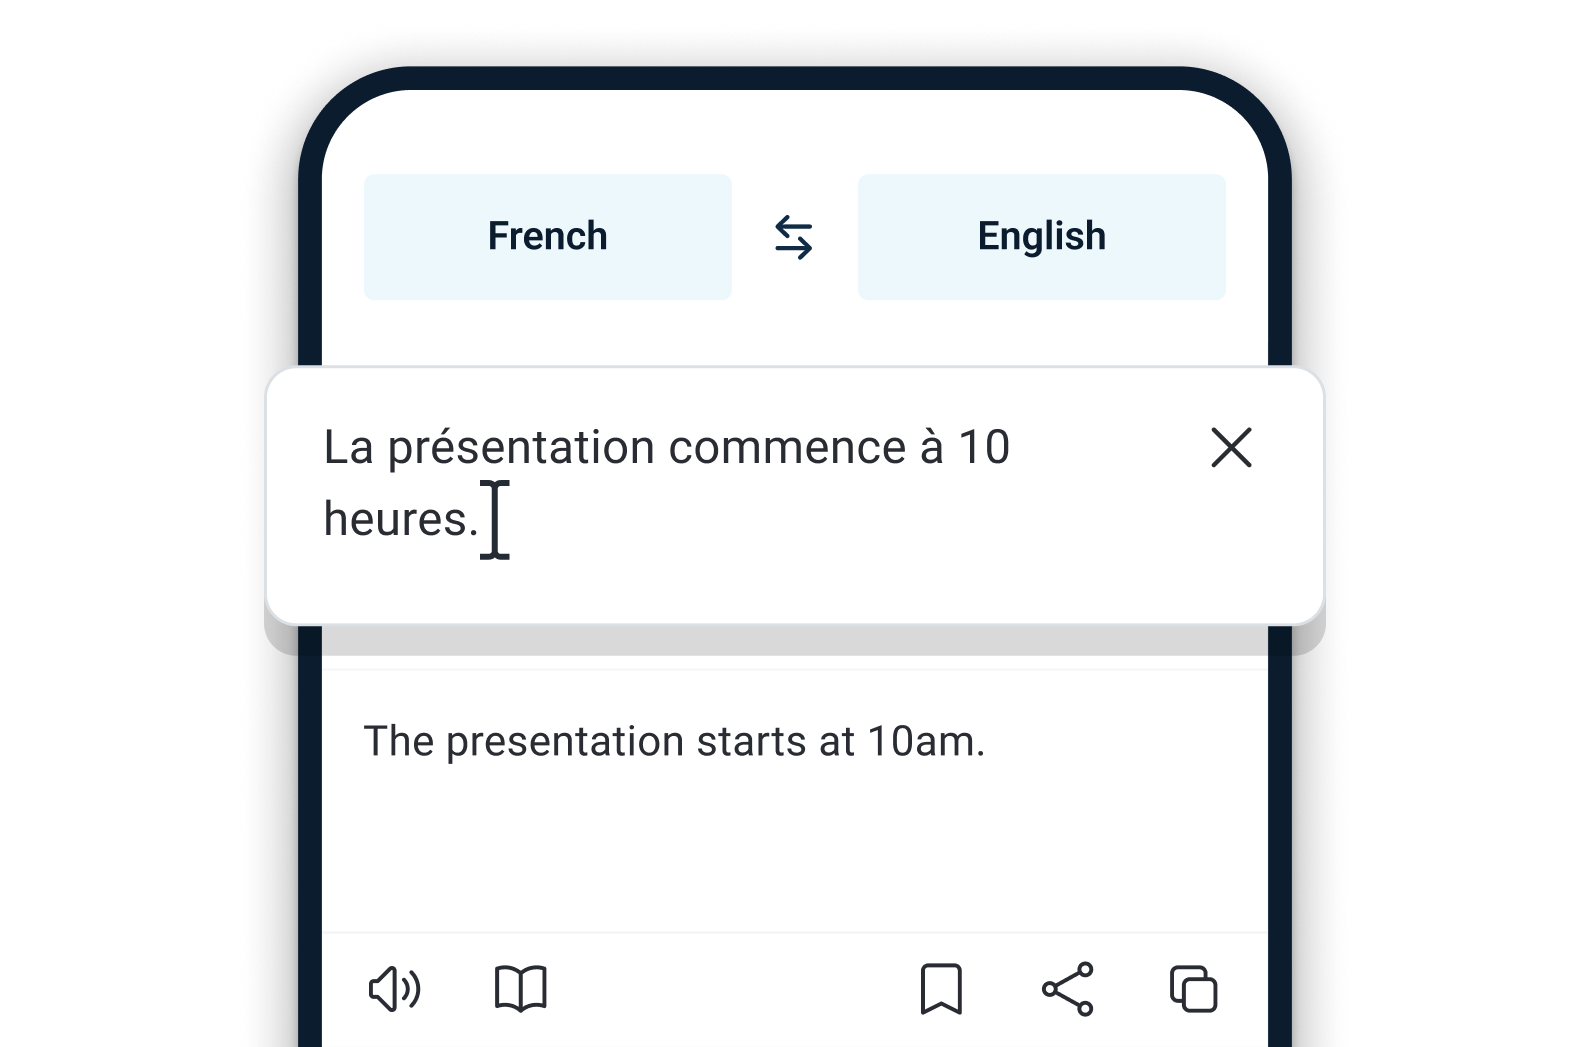 DeepLアプリにフランス語から英語に翻訳されたテキストが表示されたスマートフォン